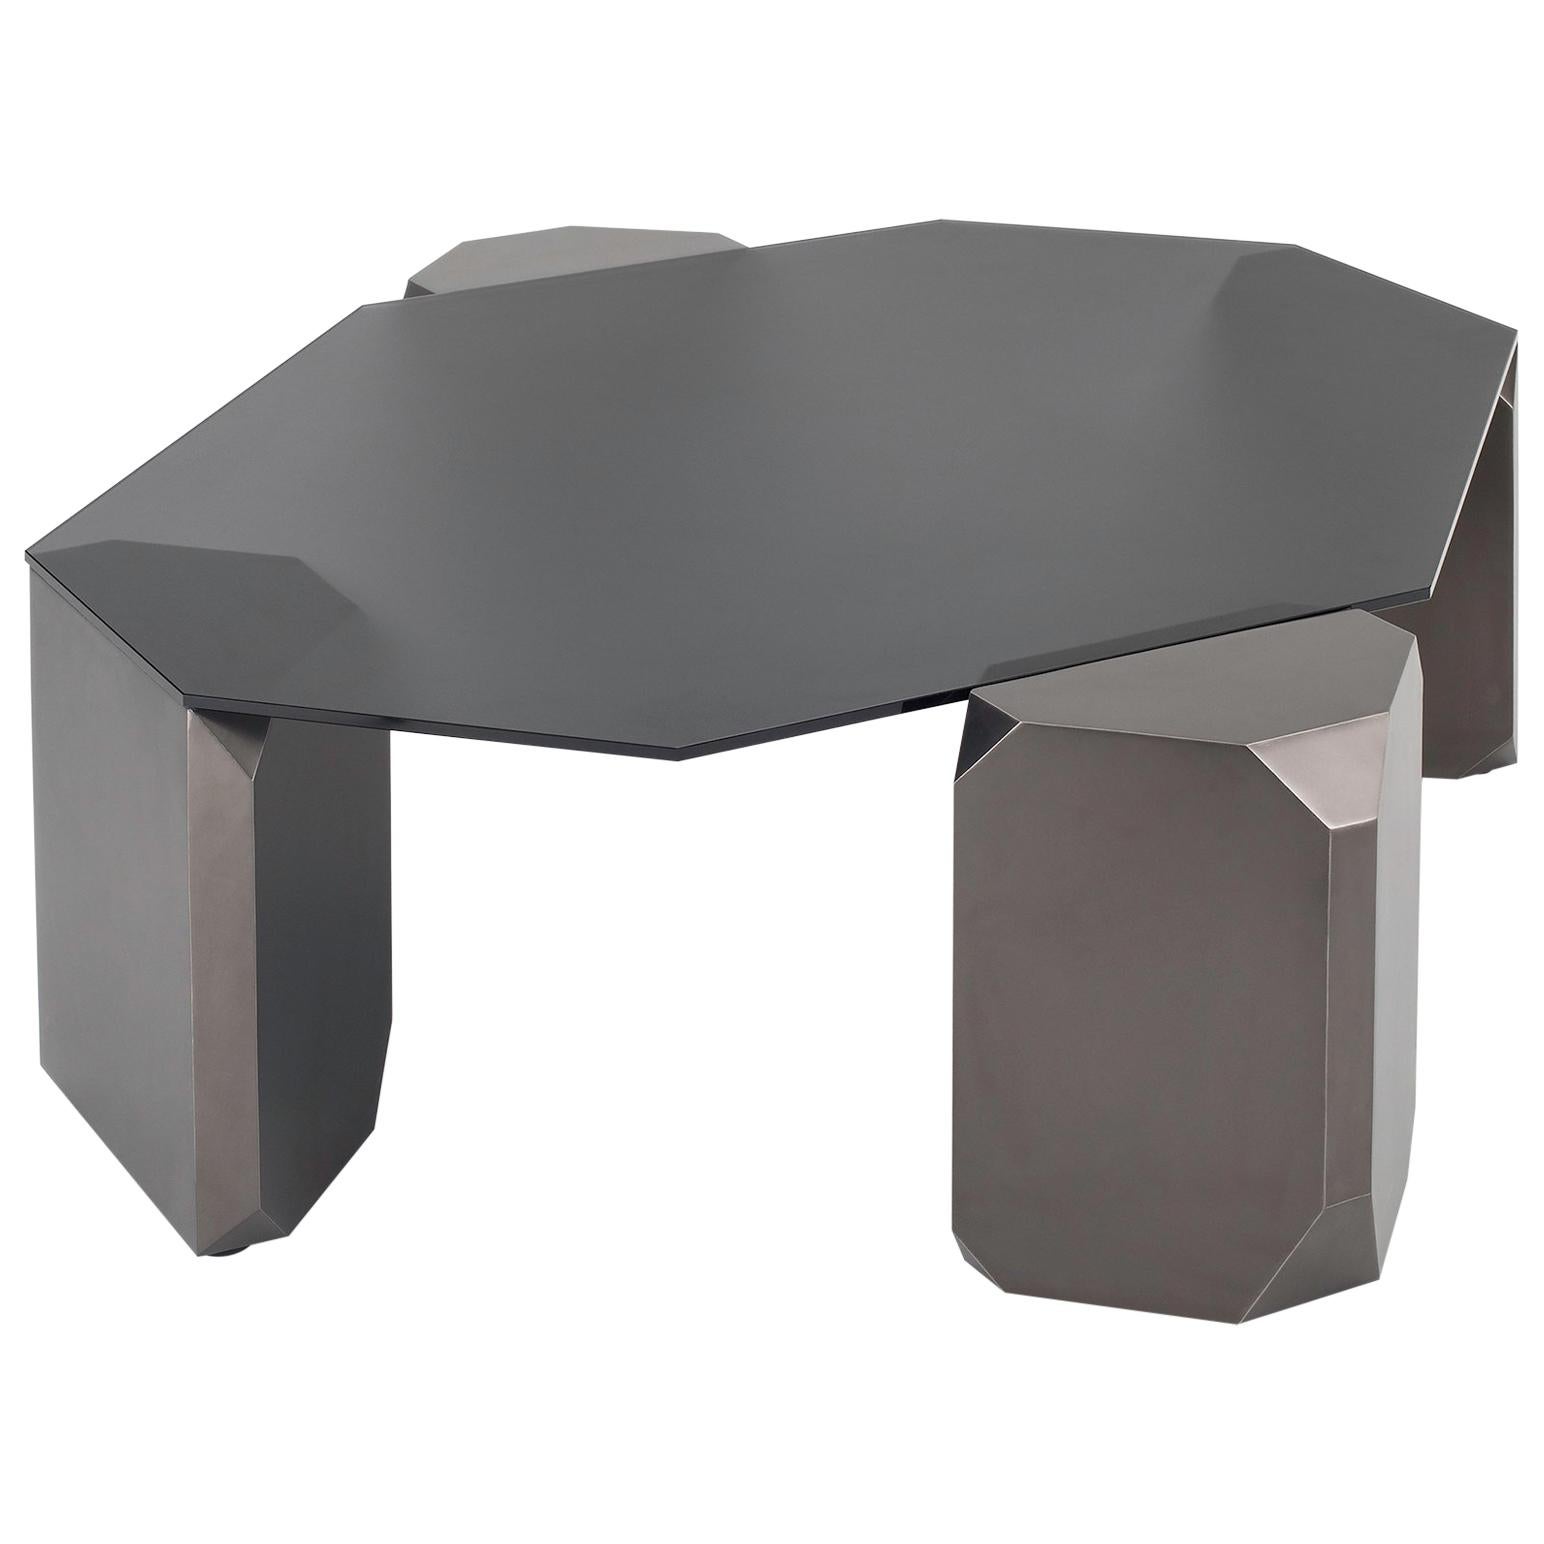 Stonehenge Coffee Table: Smoke Etched Glass Top/Bronze Legs by Avram Rusu Studio